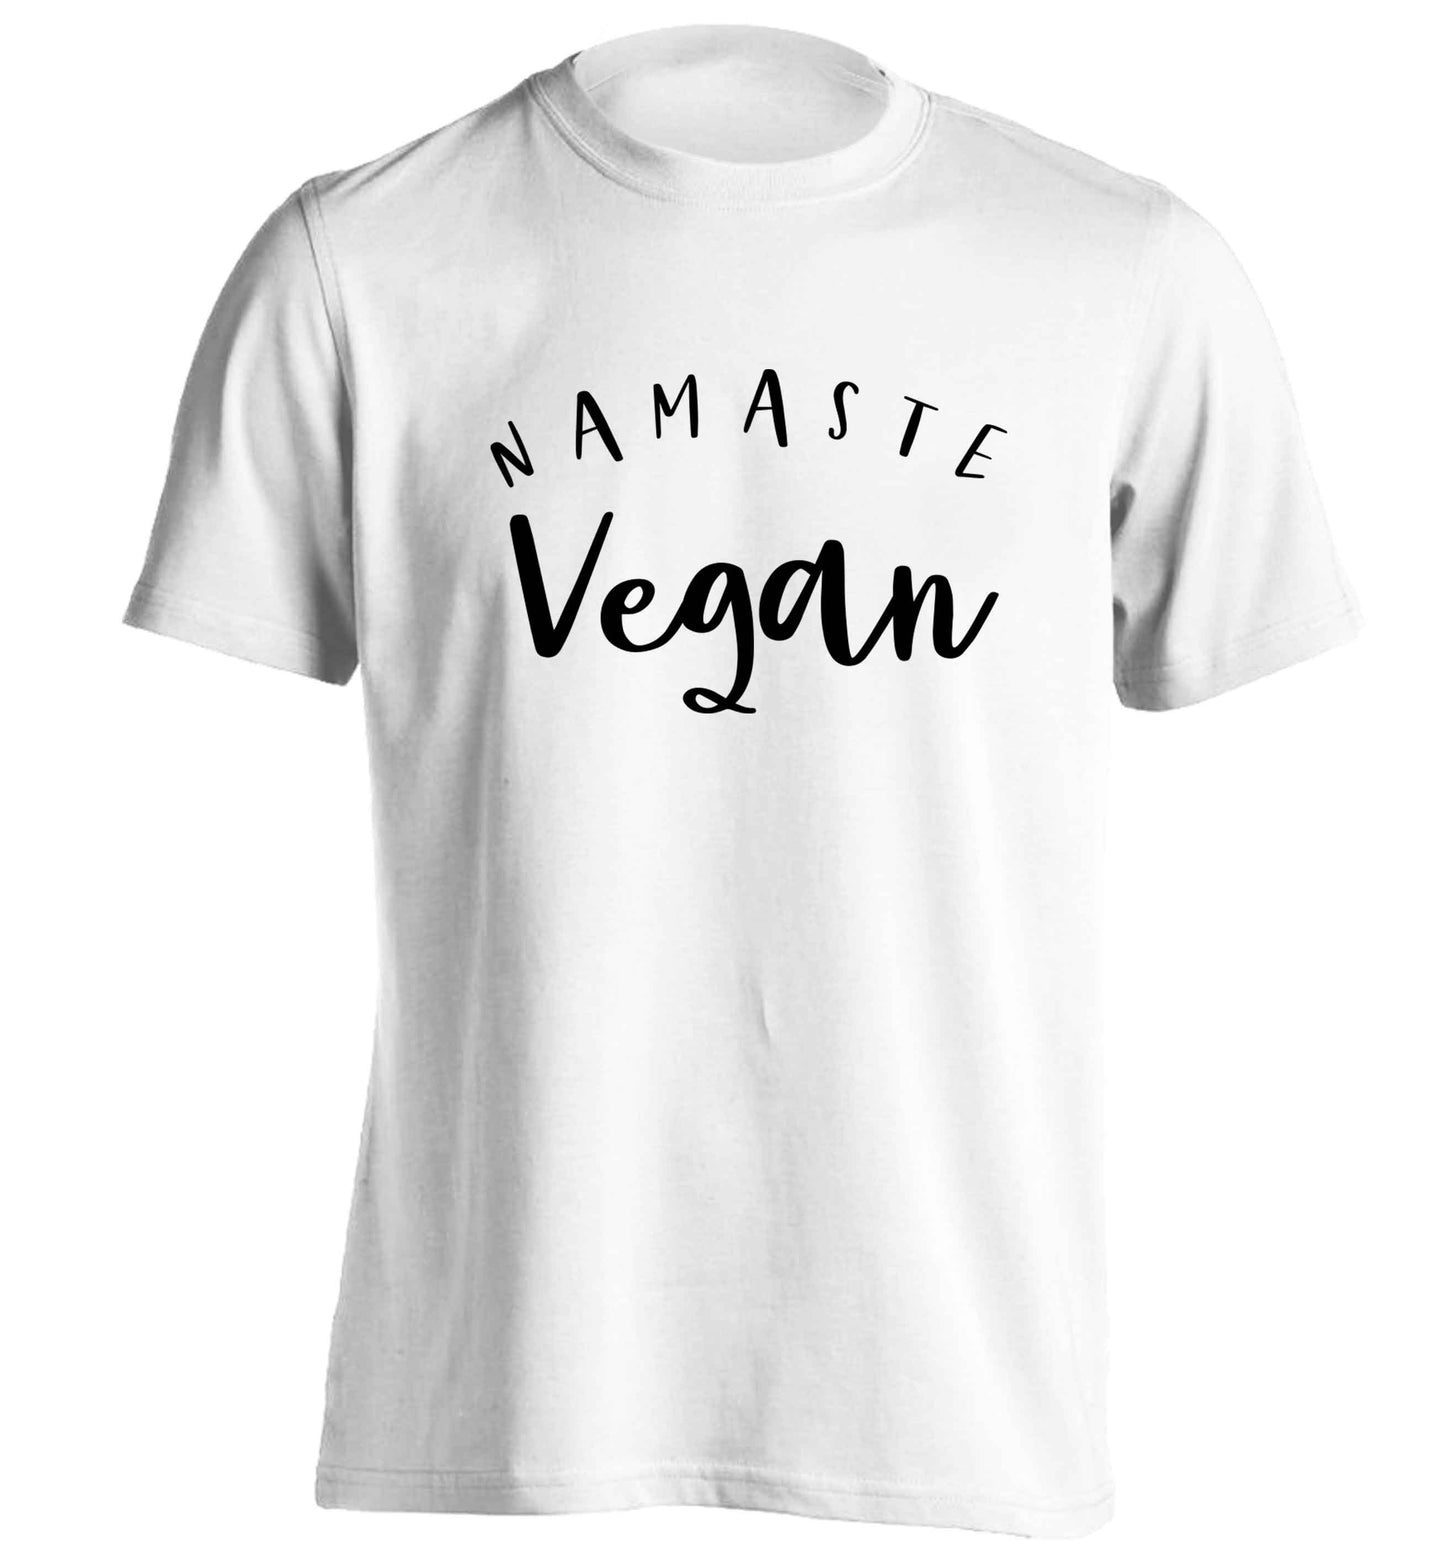 Namaste vegan adults unisex white Tshirt 2XL